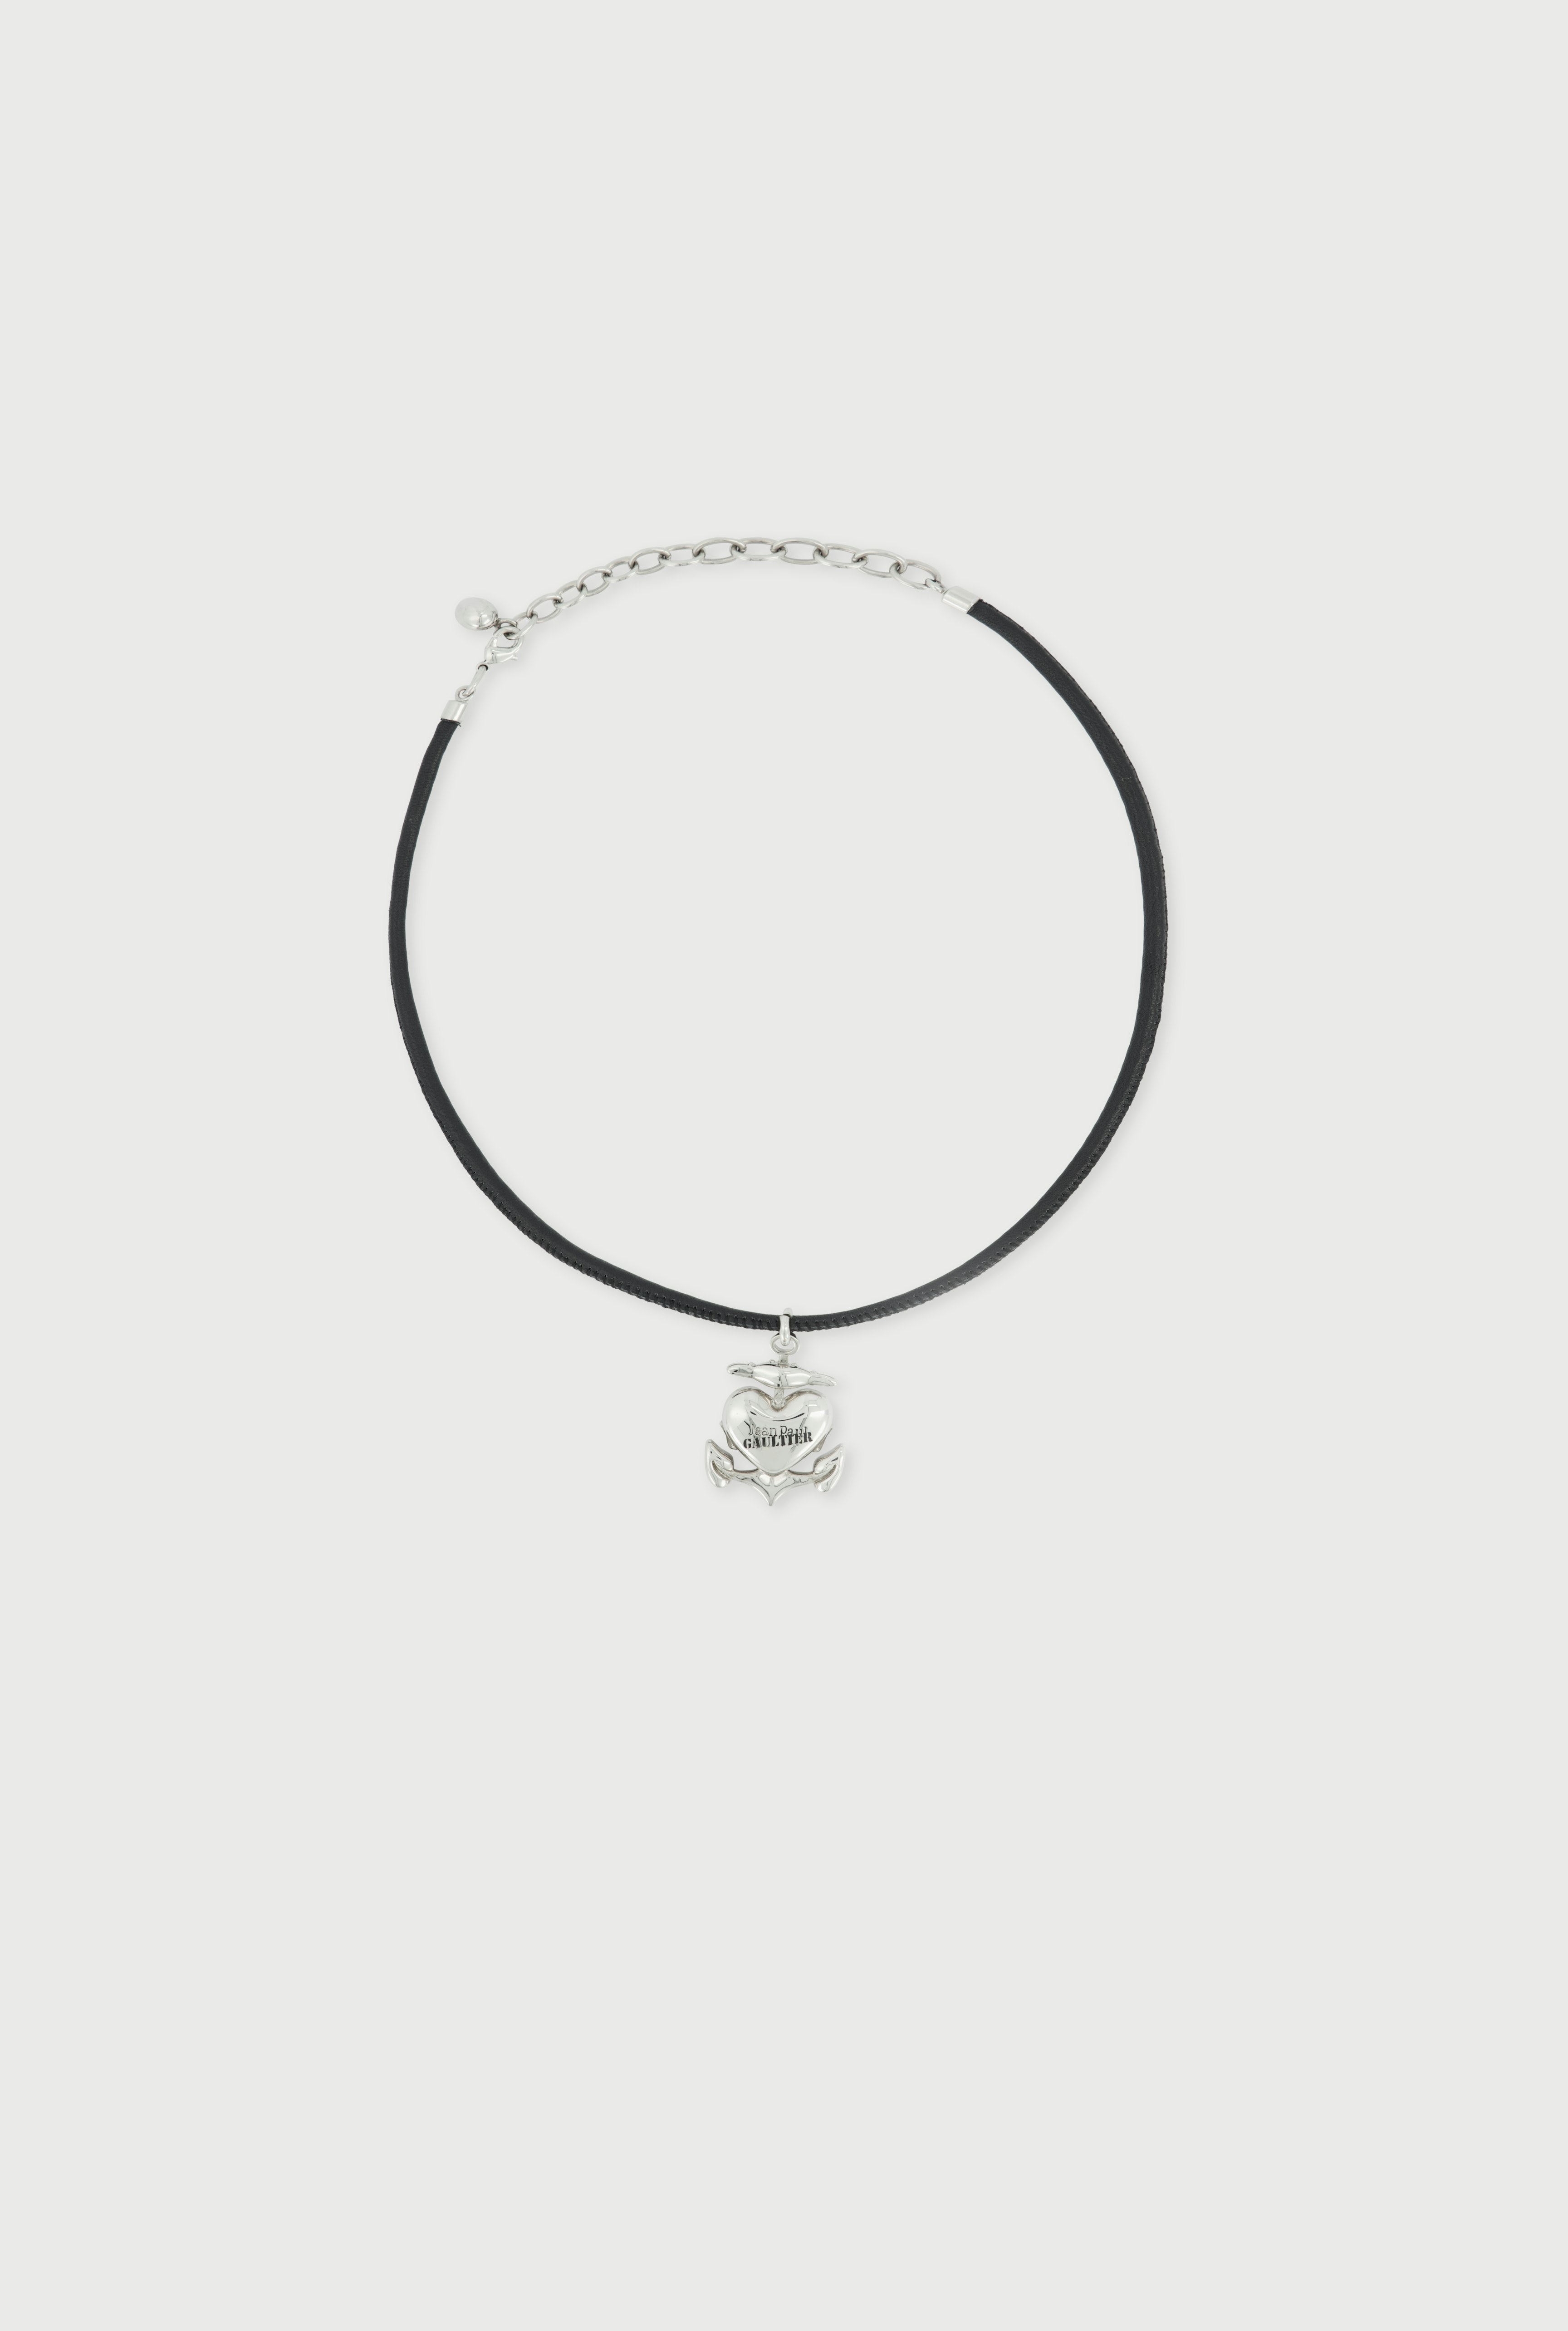 The Gaultier Heart Anchor Necklace